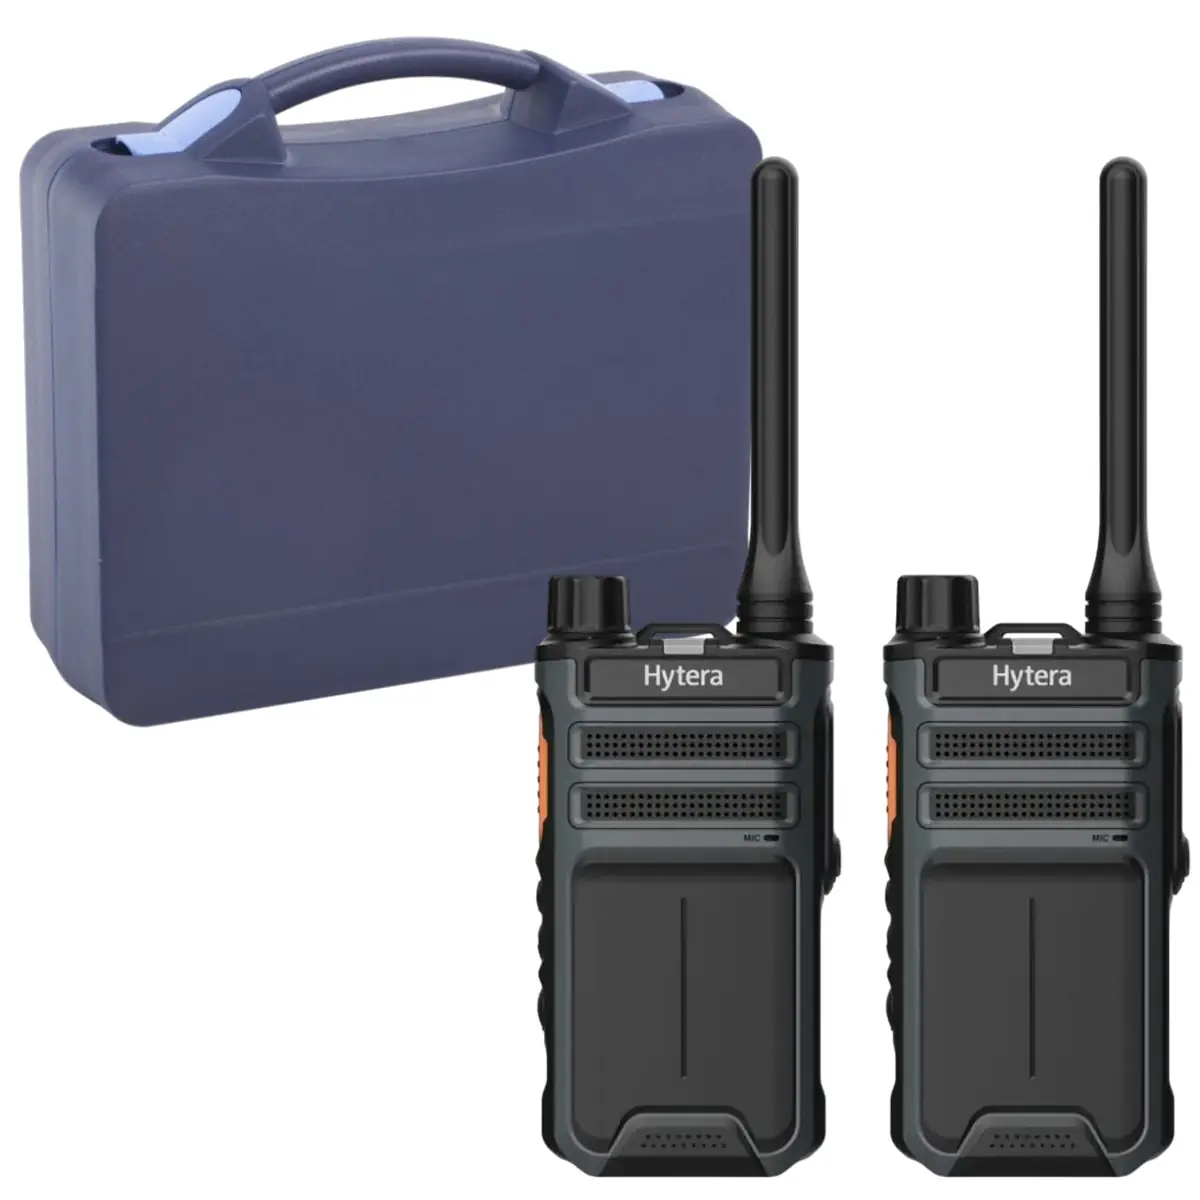 Set van 2 Hytera AP515LF + draagtas - Portofoons-walkies zonder licentie PMR446